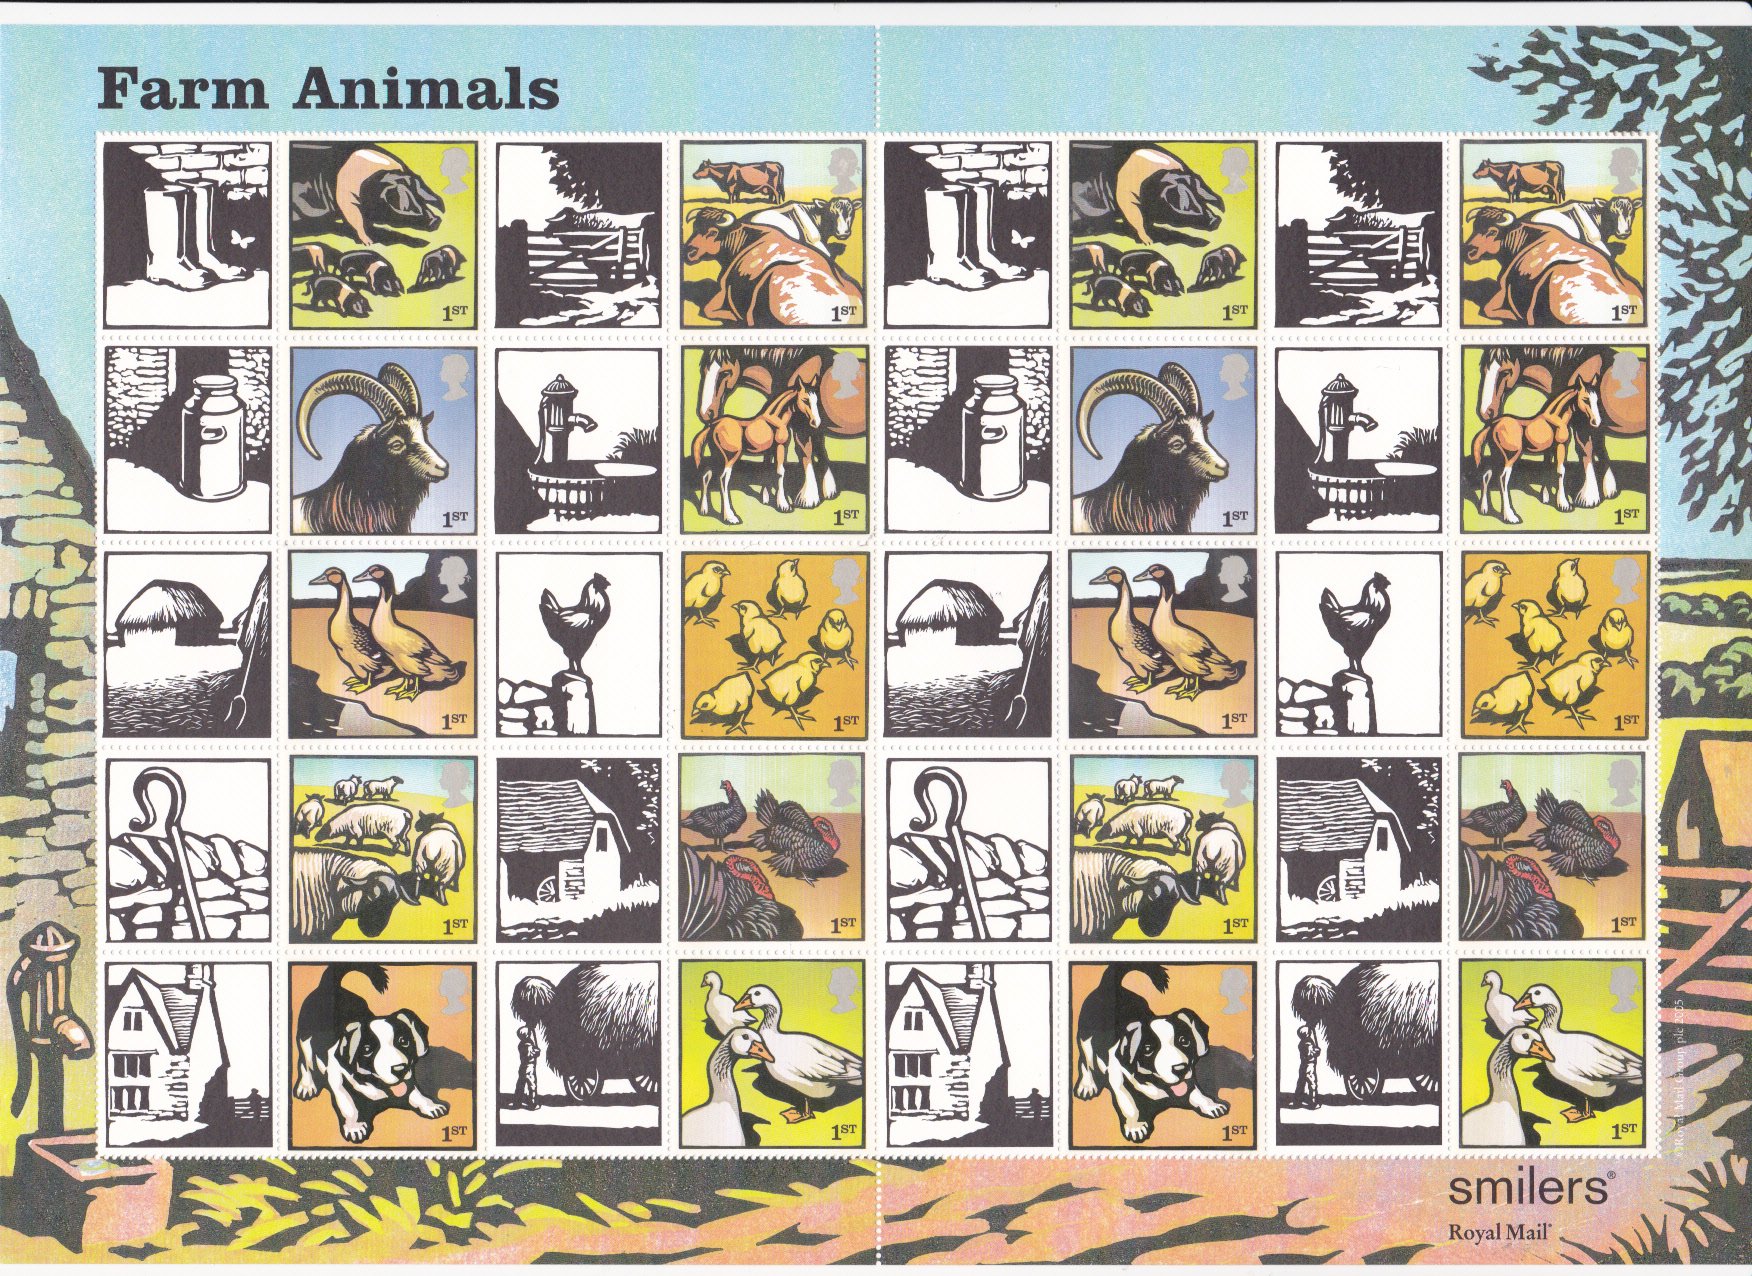 Smilers Sheet LS22 Farm Animals 2005 Royal Mail - GB Stampline